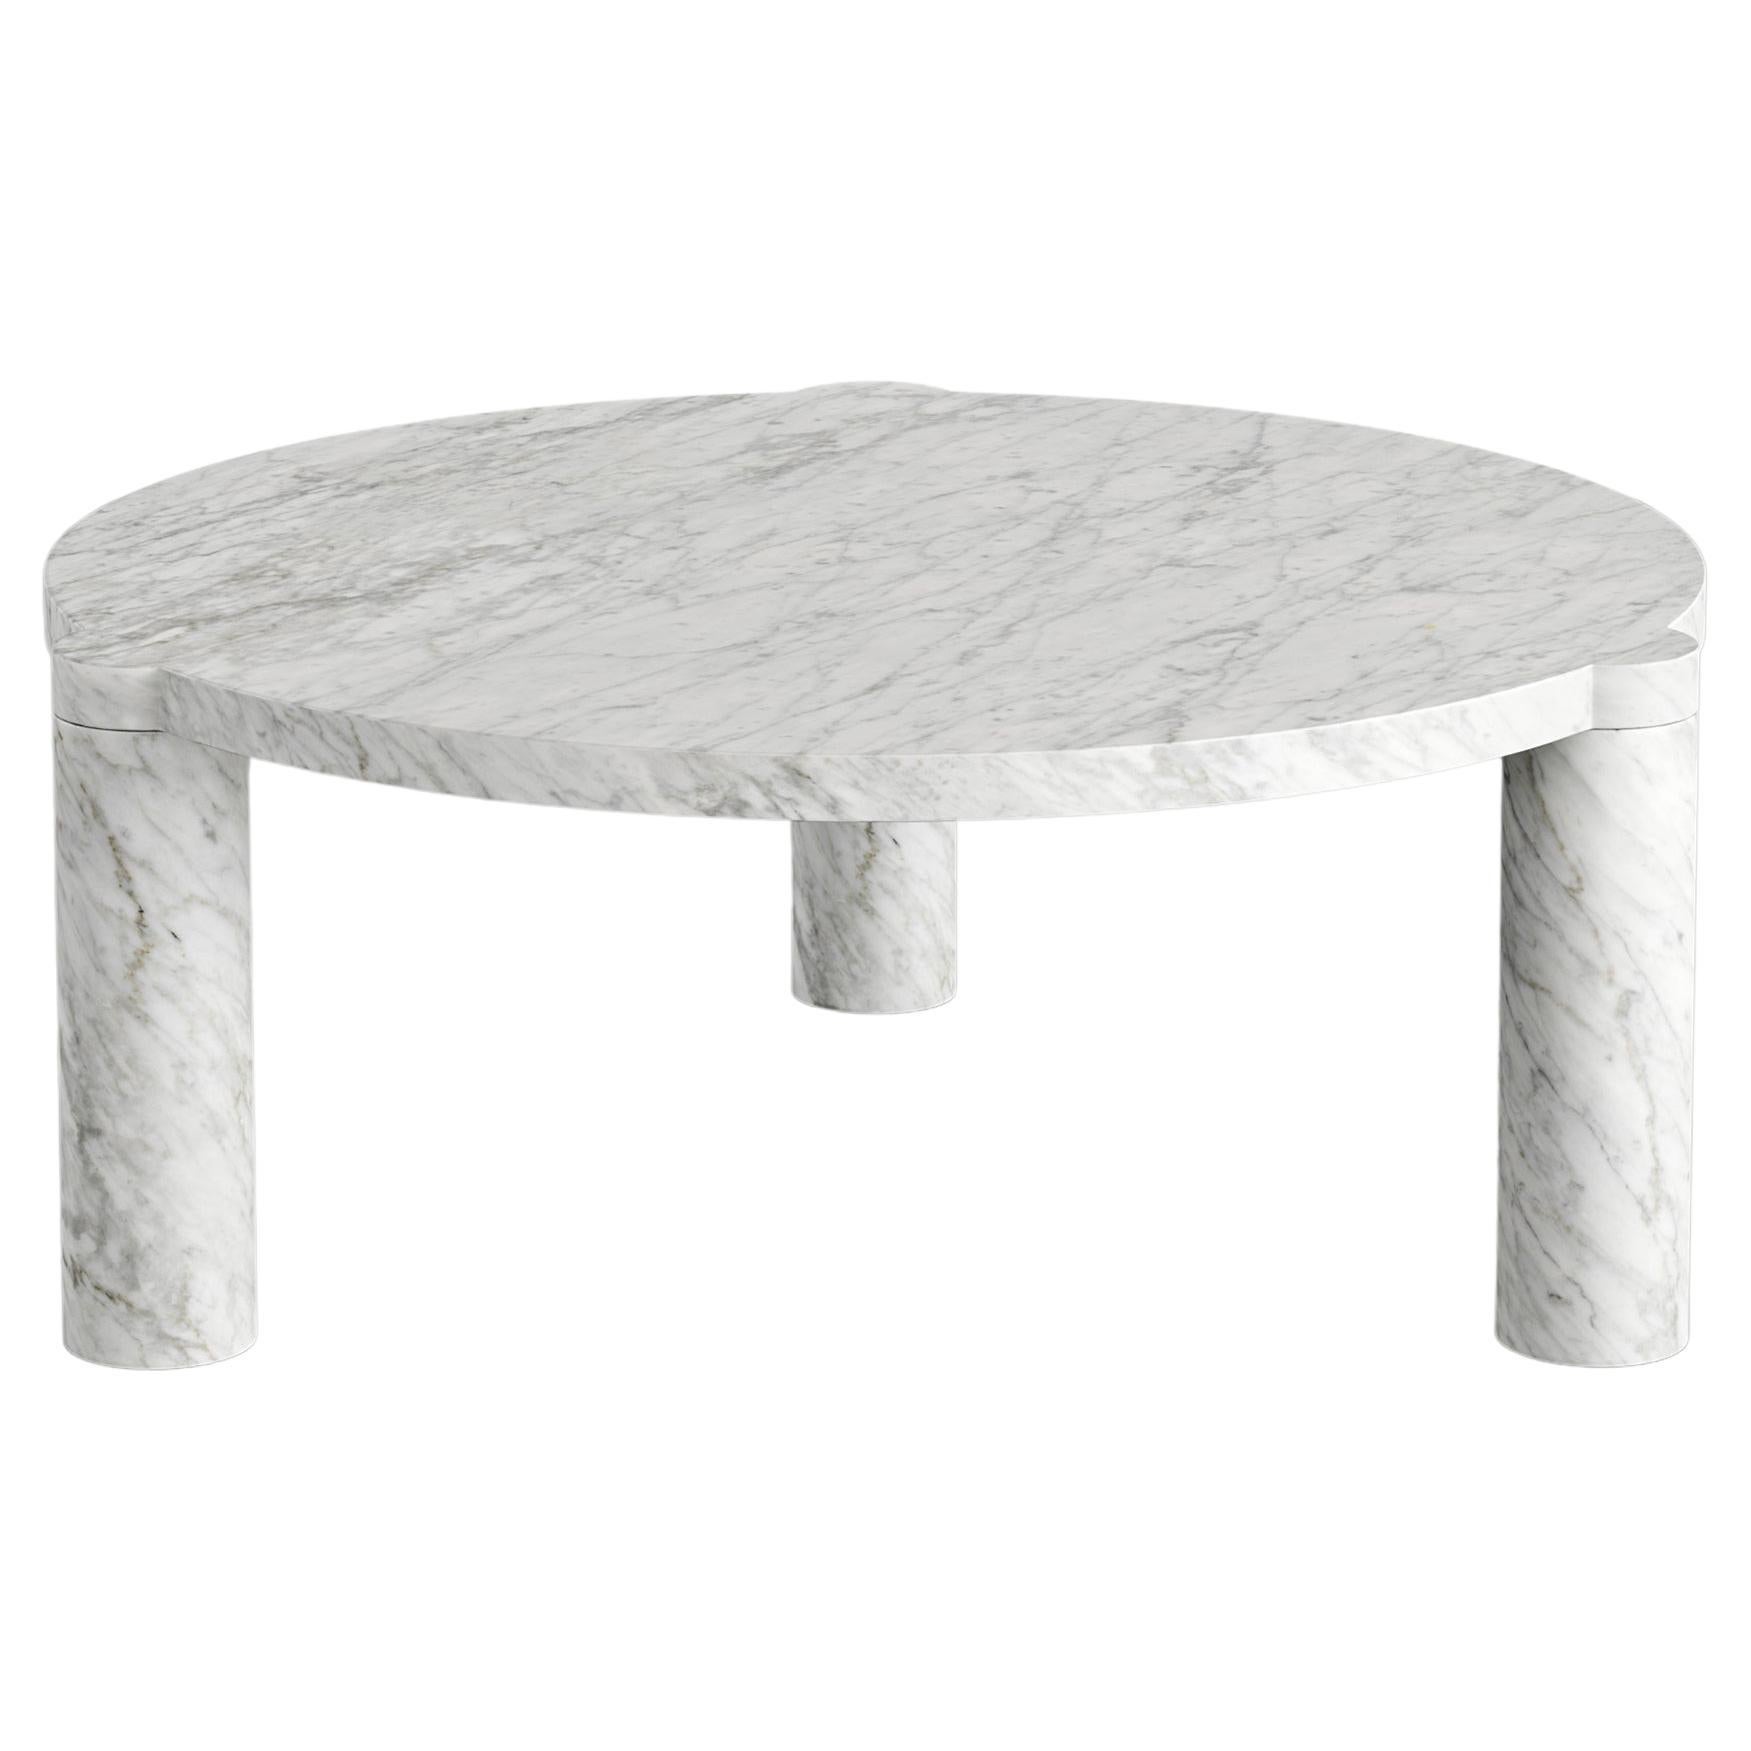 Table basse en marbre Alexis par Agglomerati